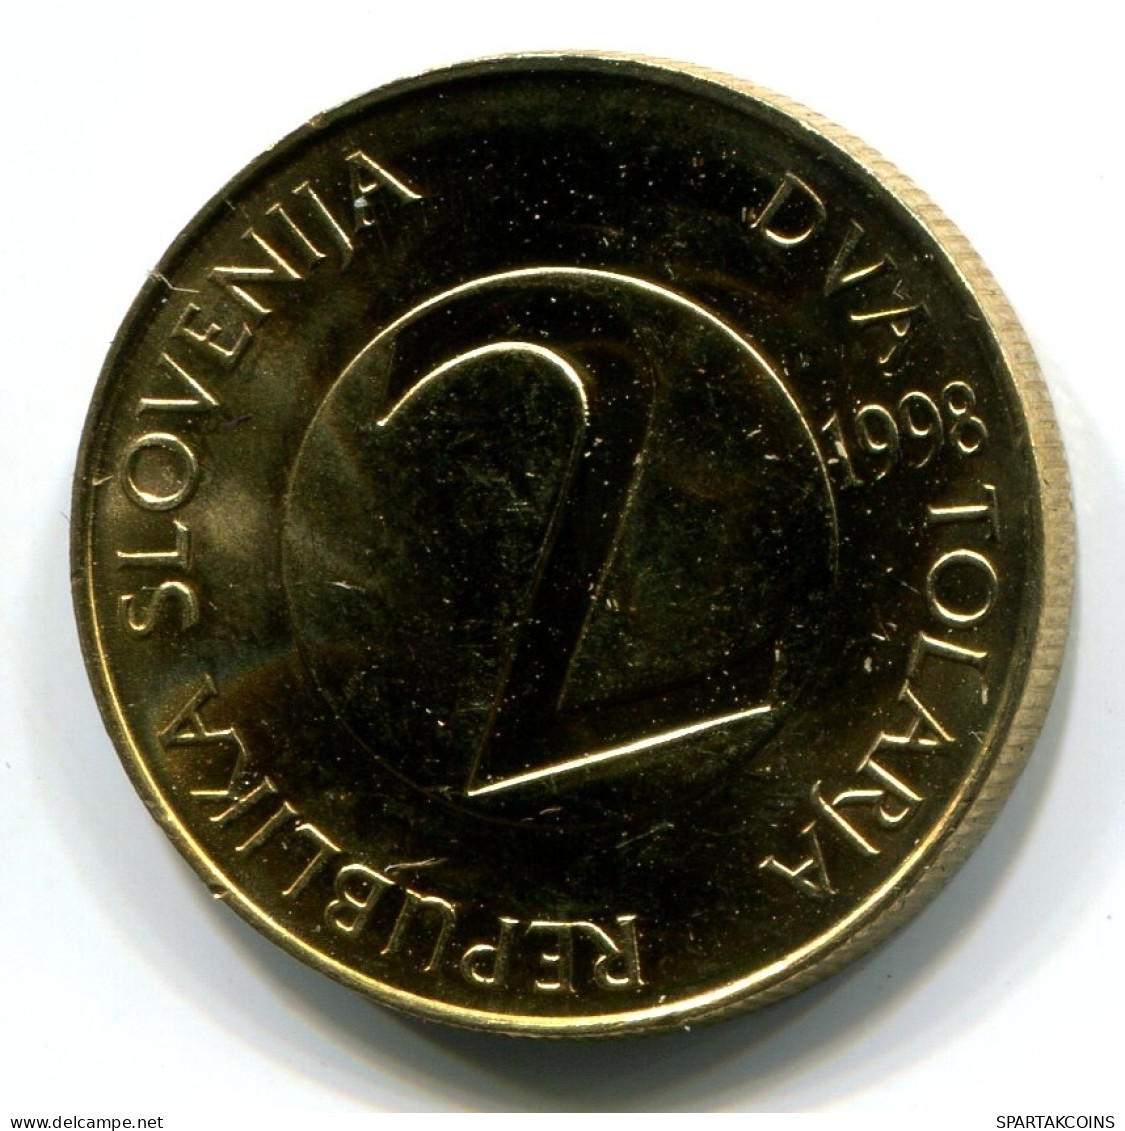 2 TOLAR 1998 SLOVENIA UNC Coin #W11127.U - Slovenia